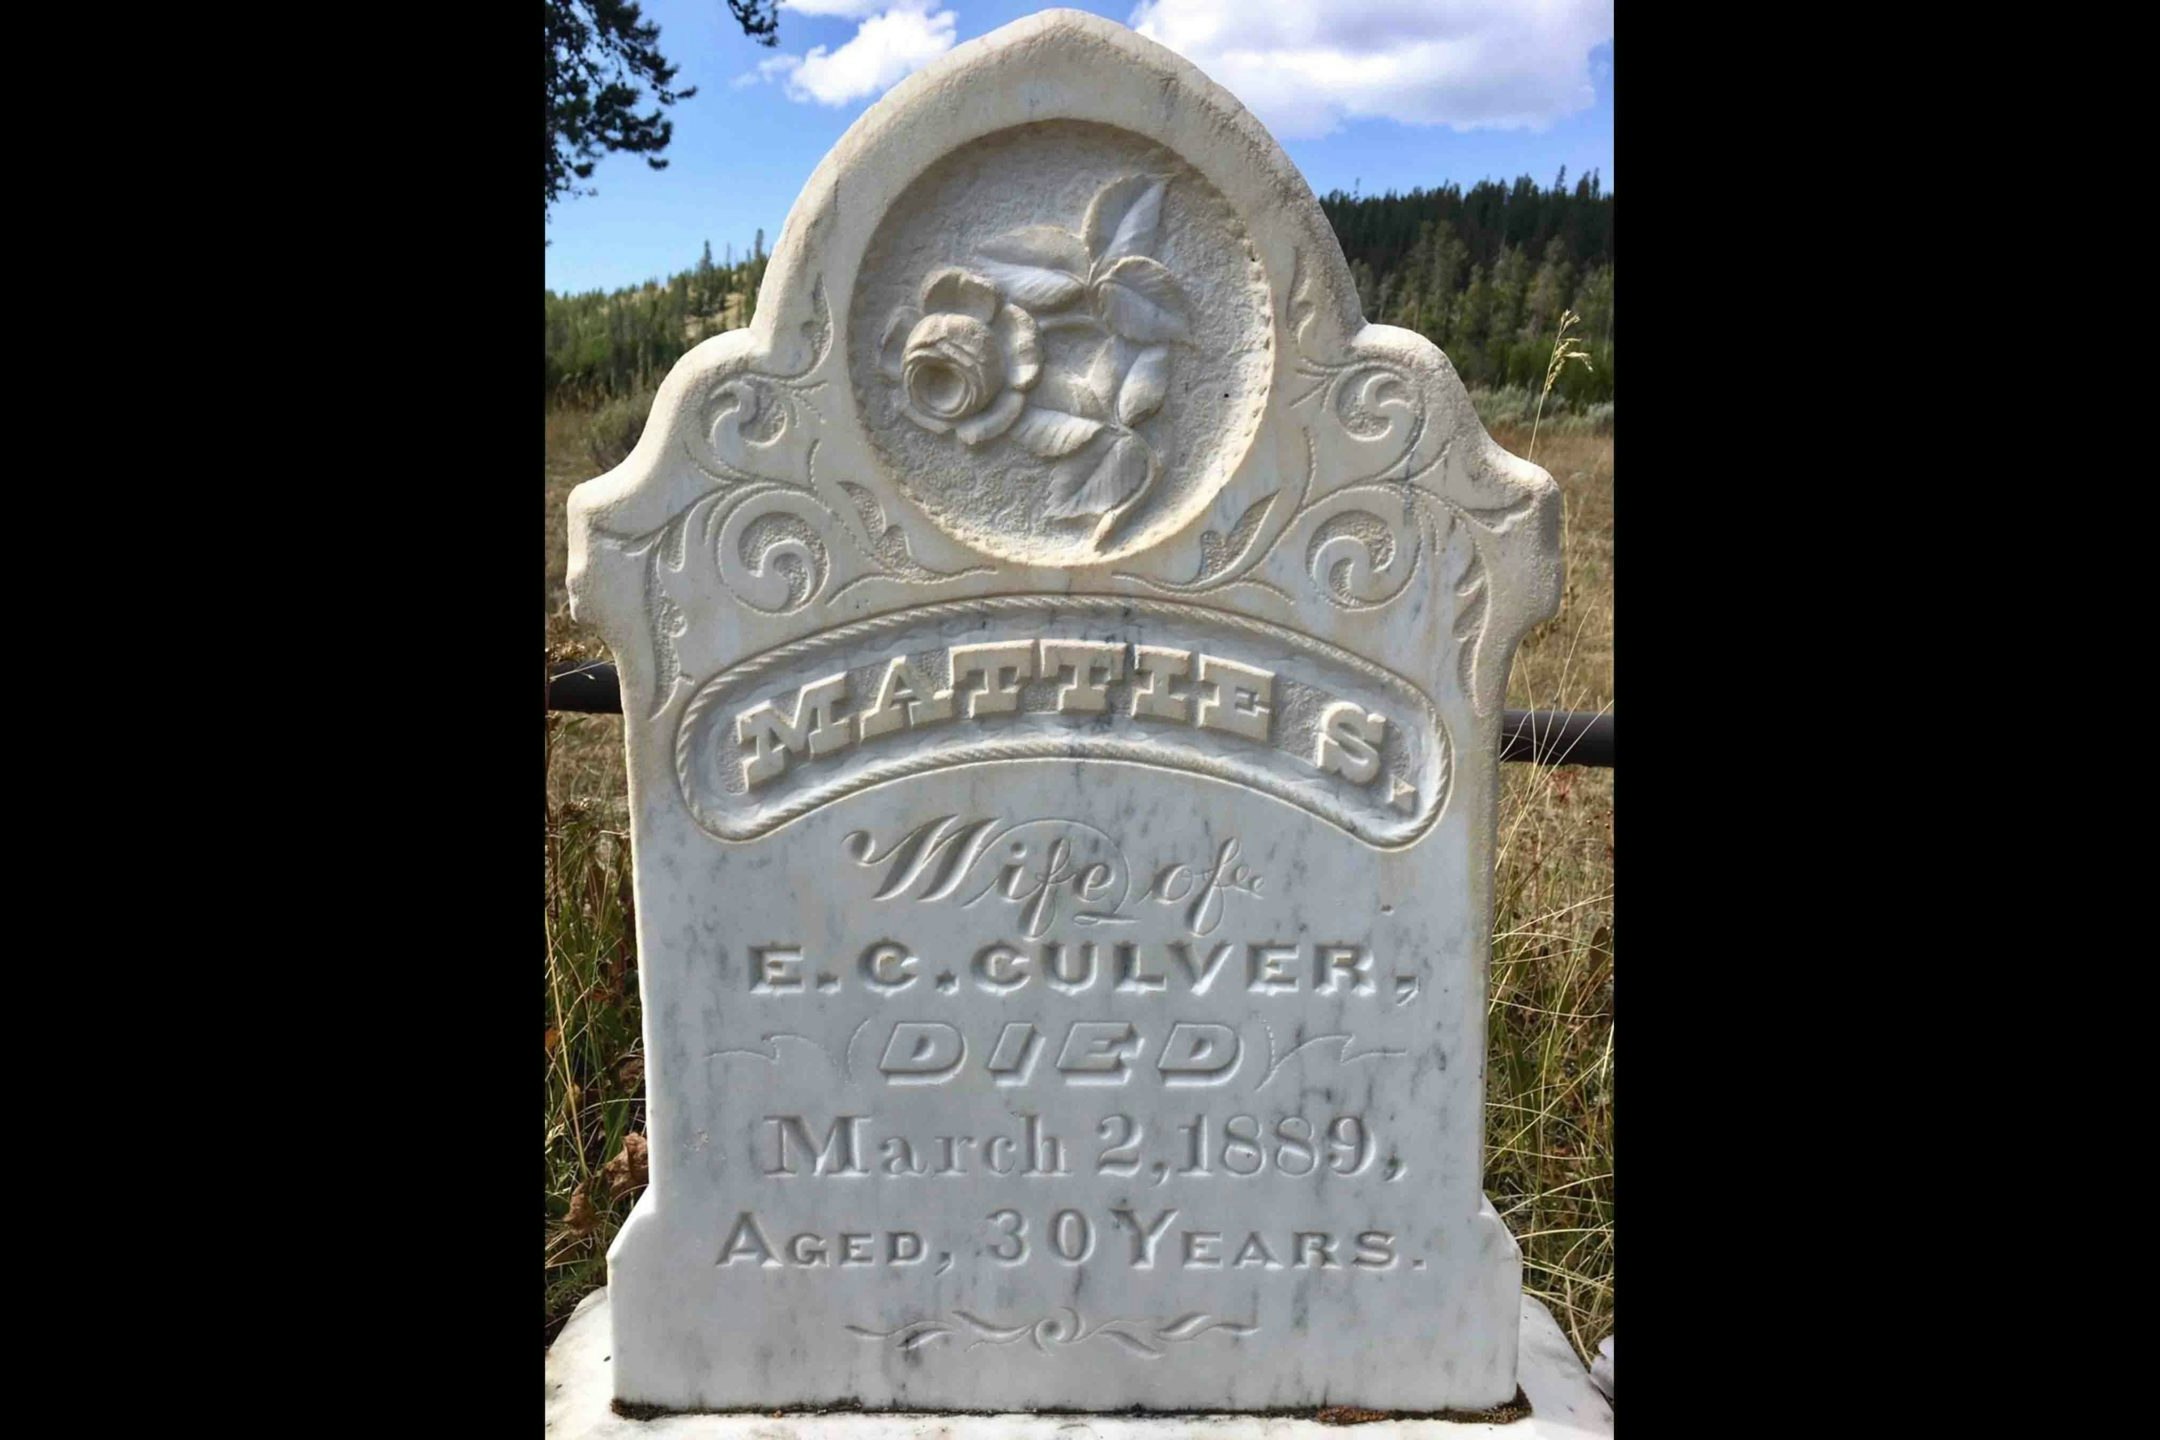 Matties grave 2 10 19 22 scaled